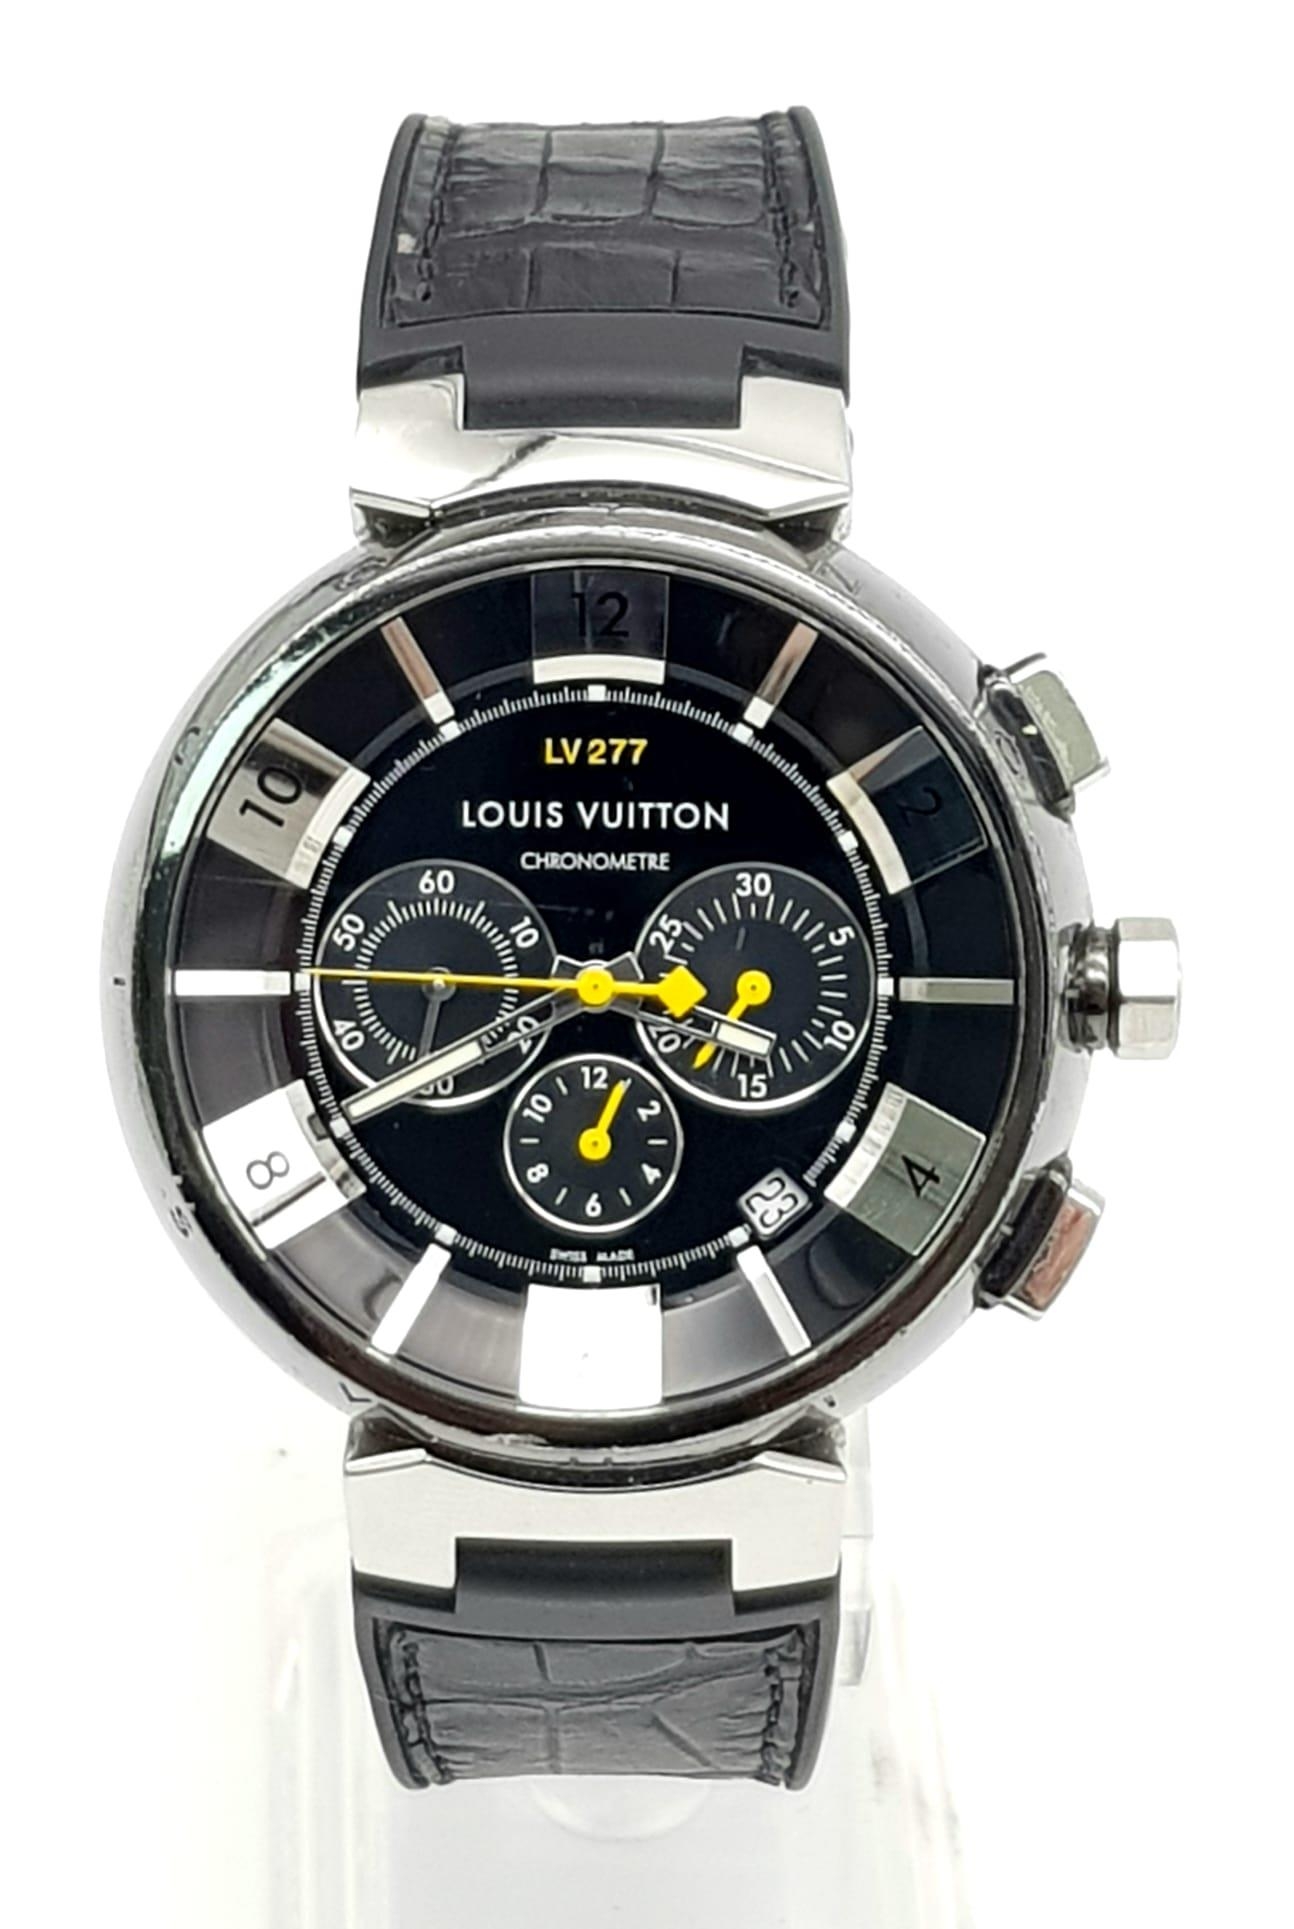 vuitton lv277 watch price